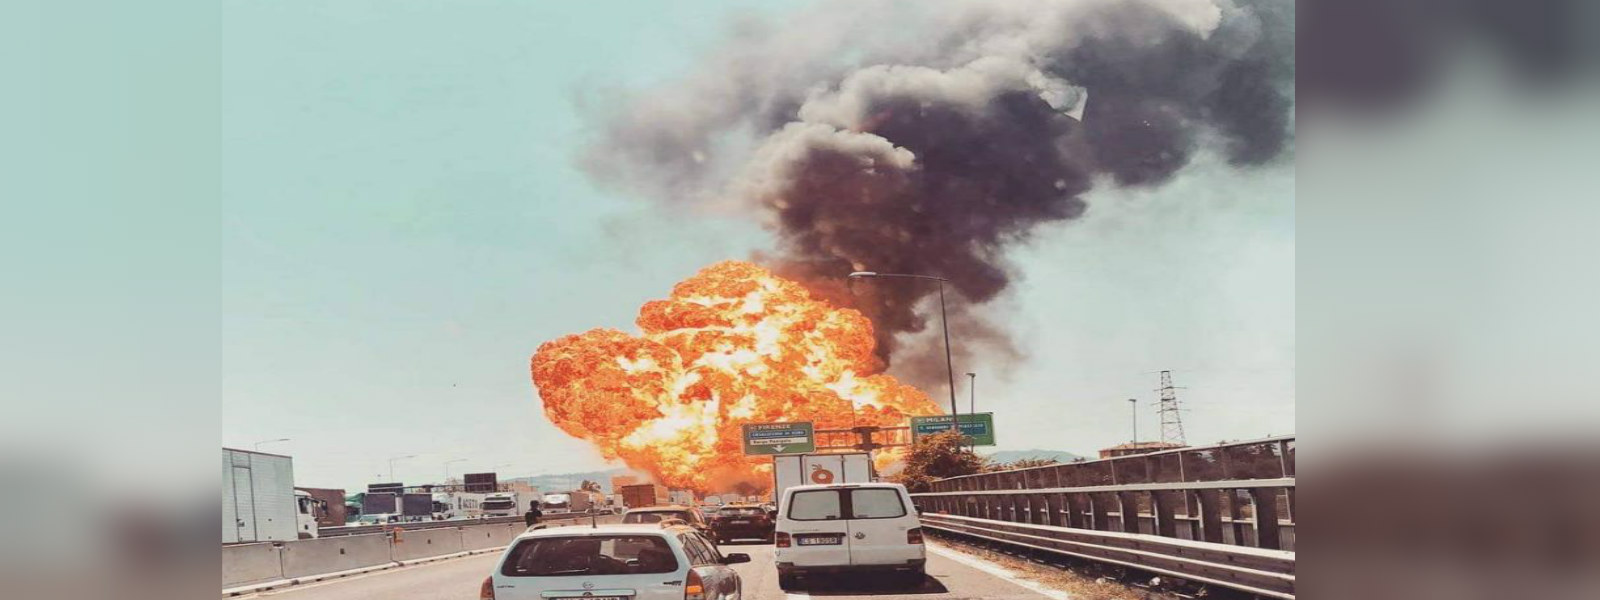 Explosion near the Bologna airport 